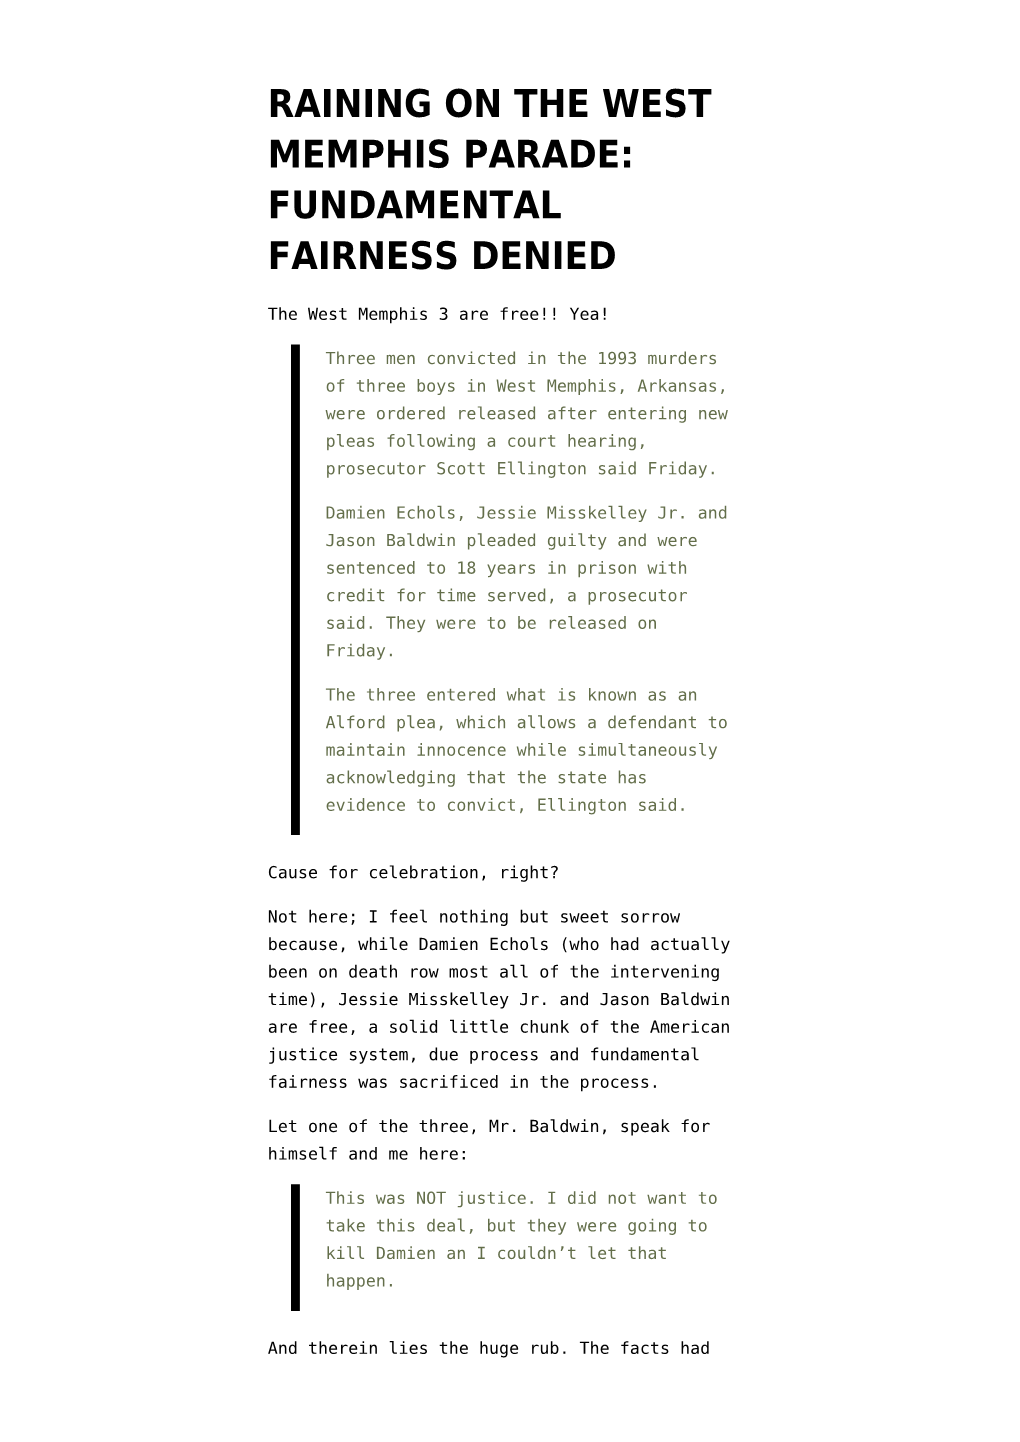 Fundamental Fairness Denied